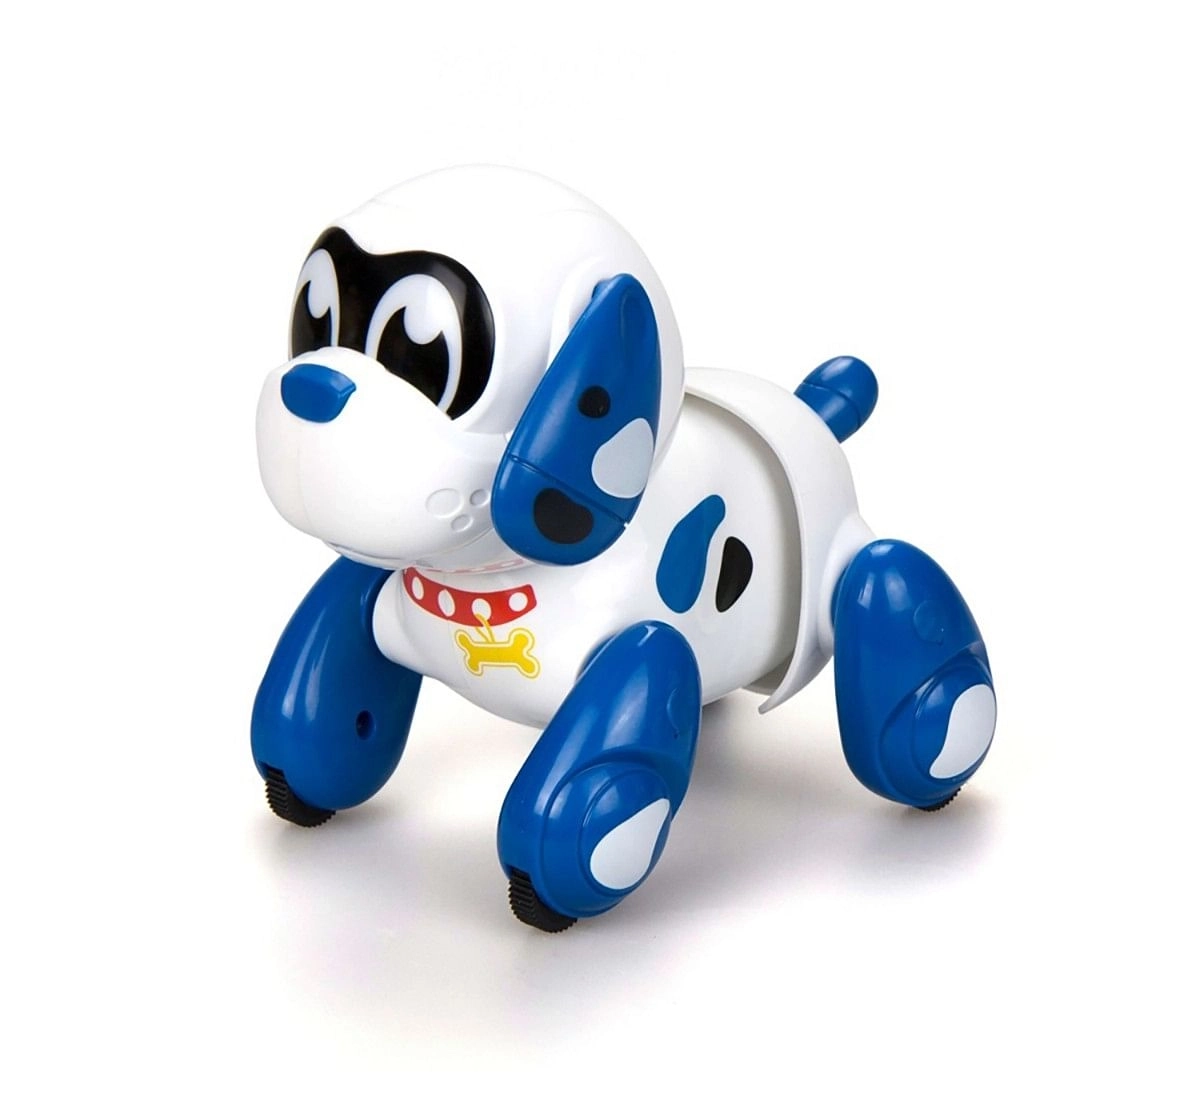 Silverlit Ycoo Ruffy Remote Control Toys for Kids age 3Y+ 